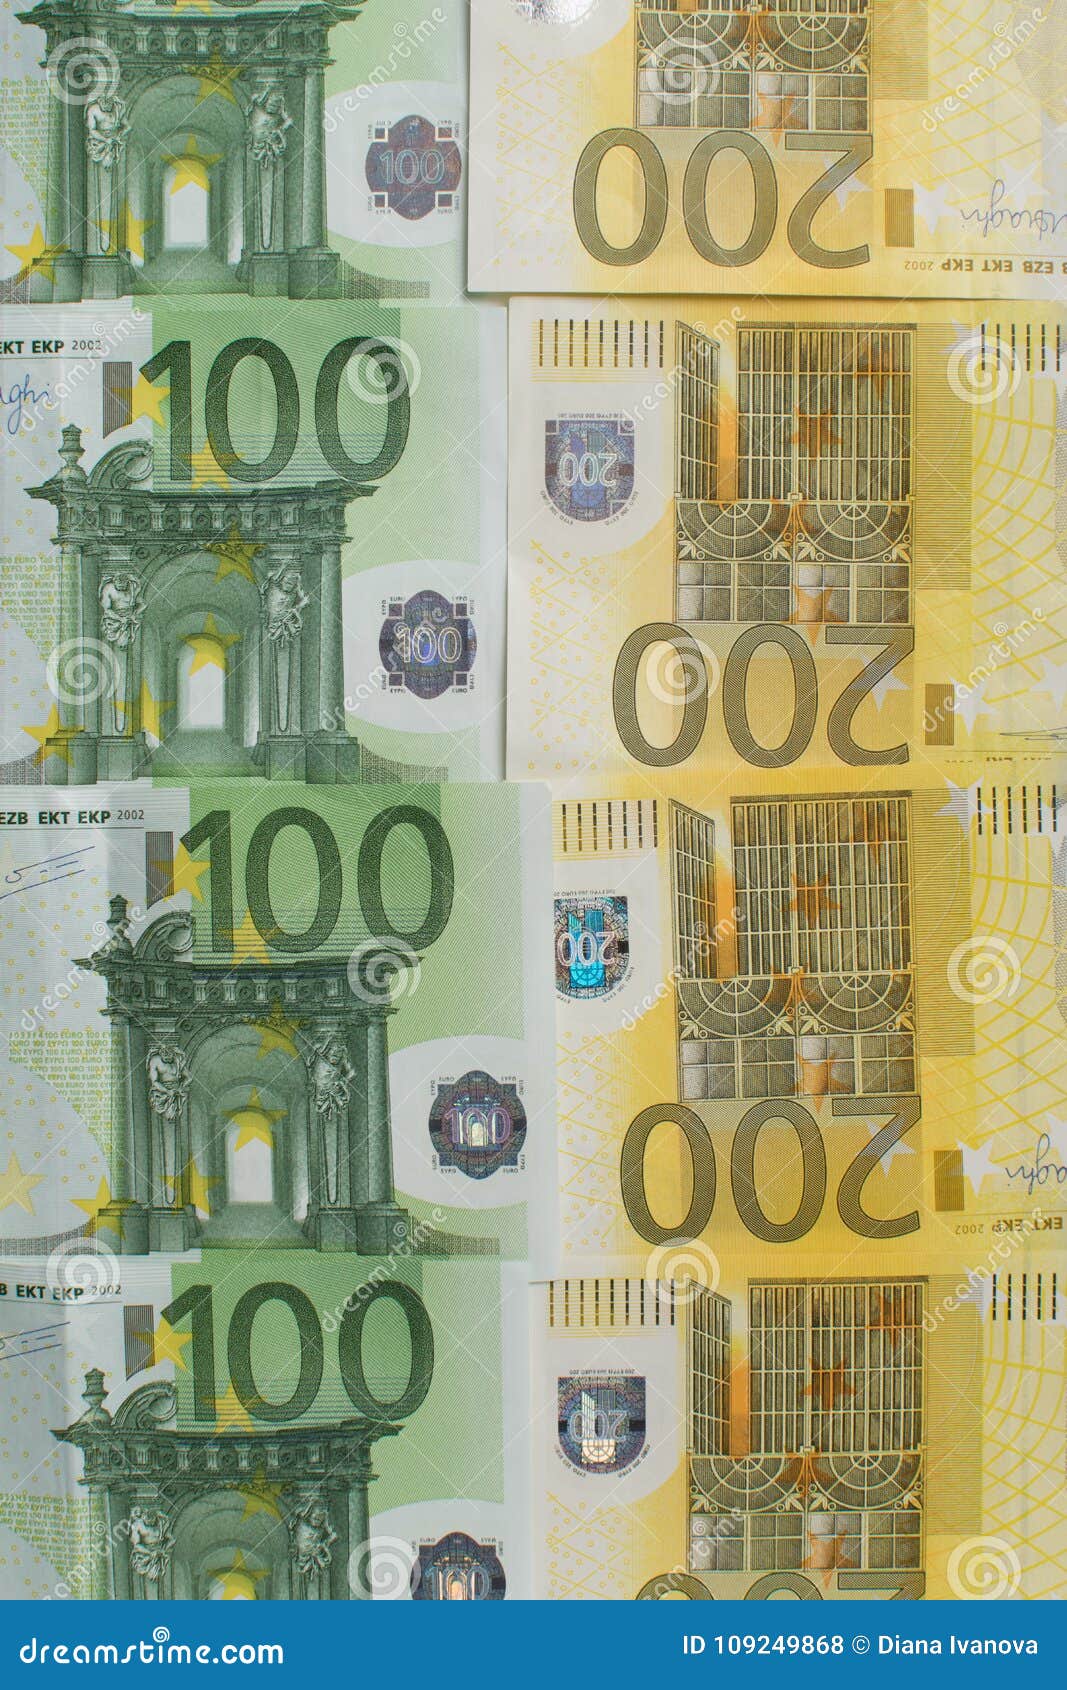 a lot off euros cash